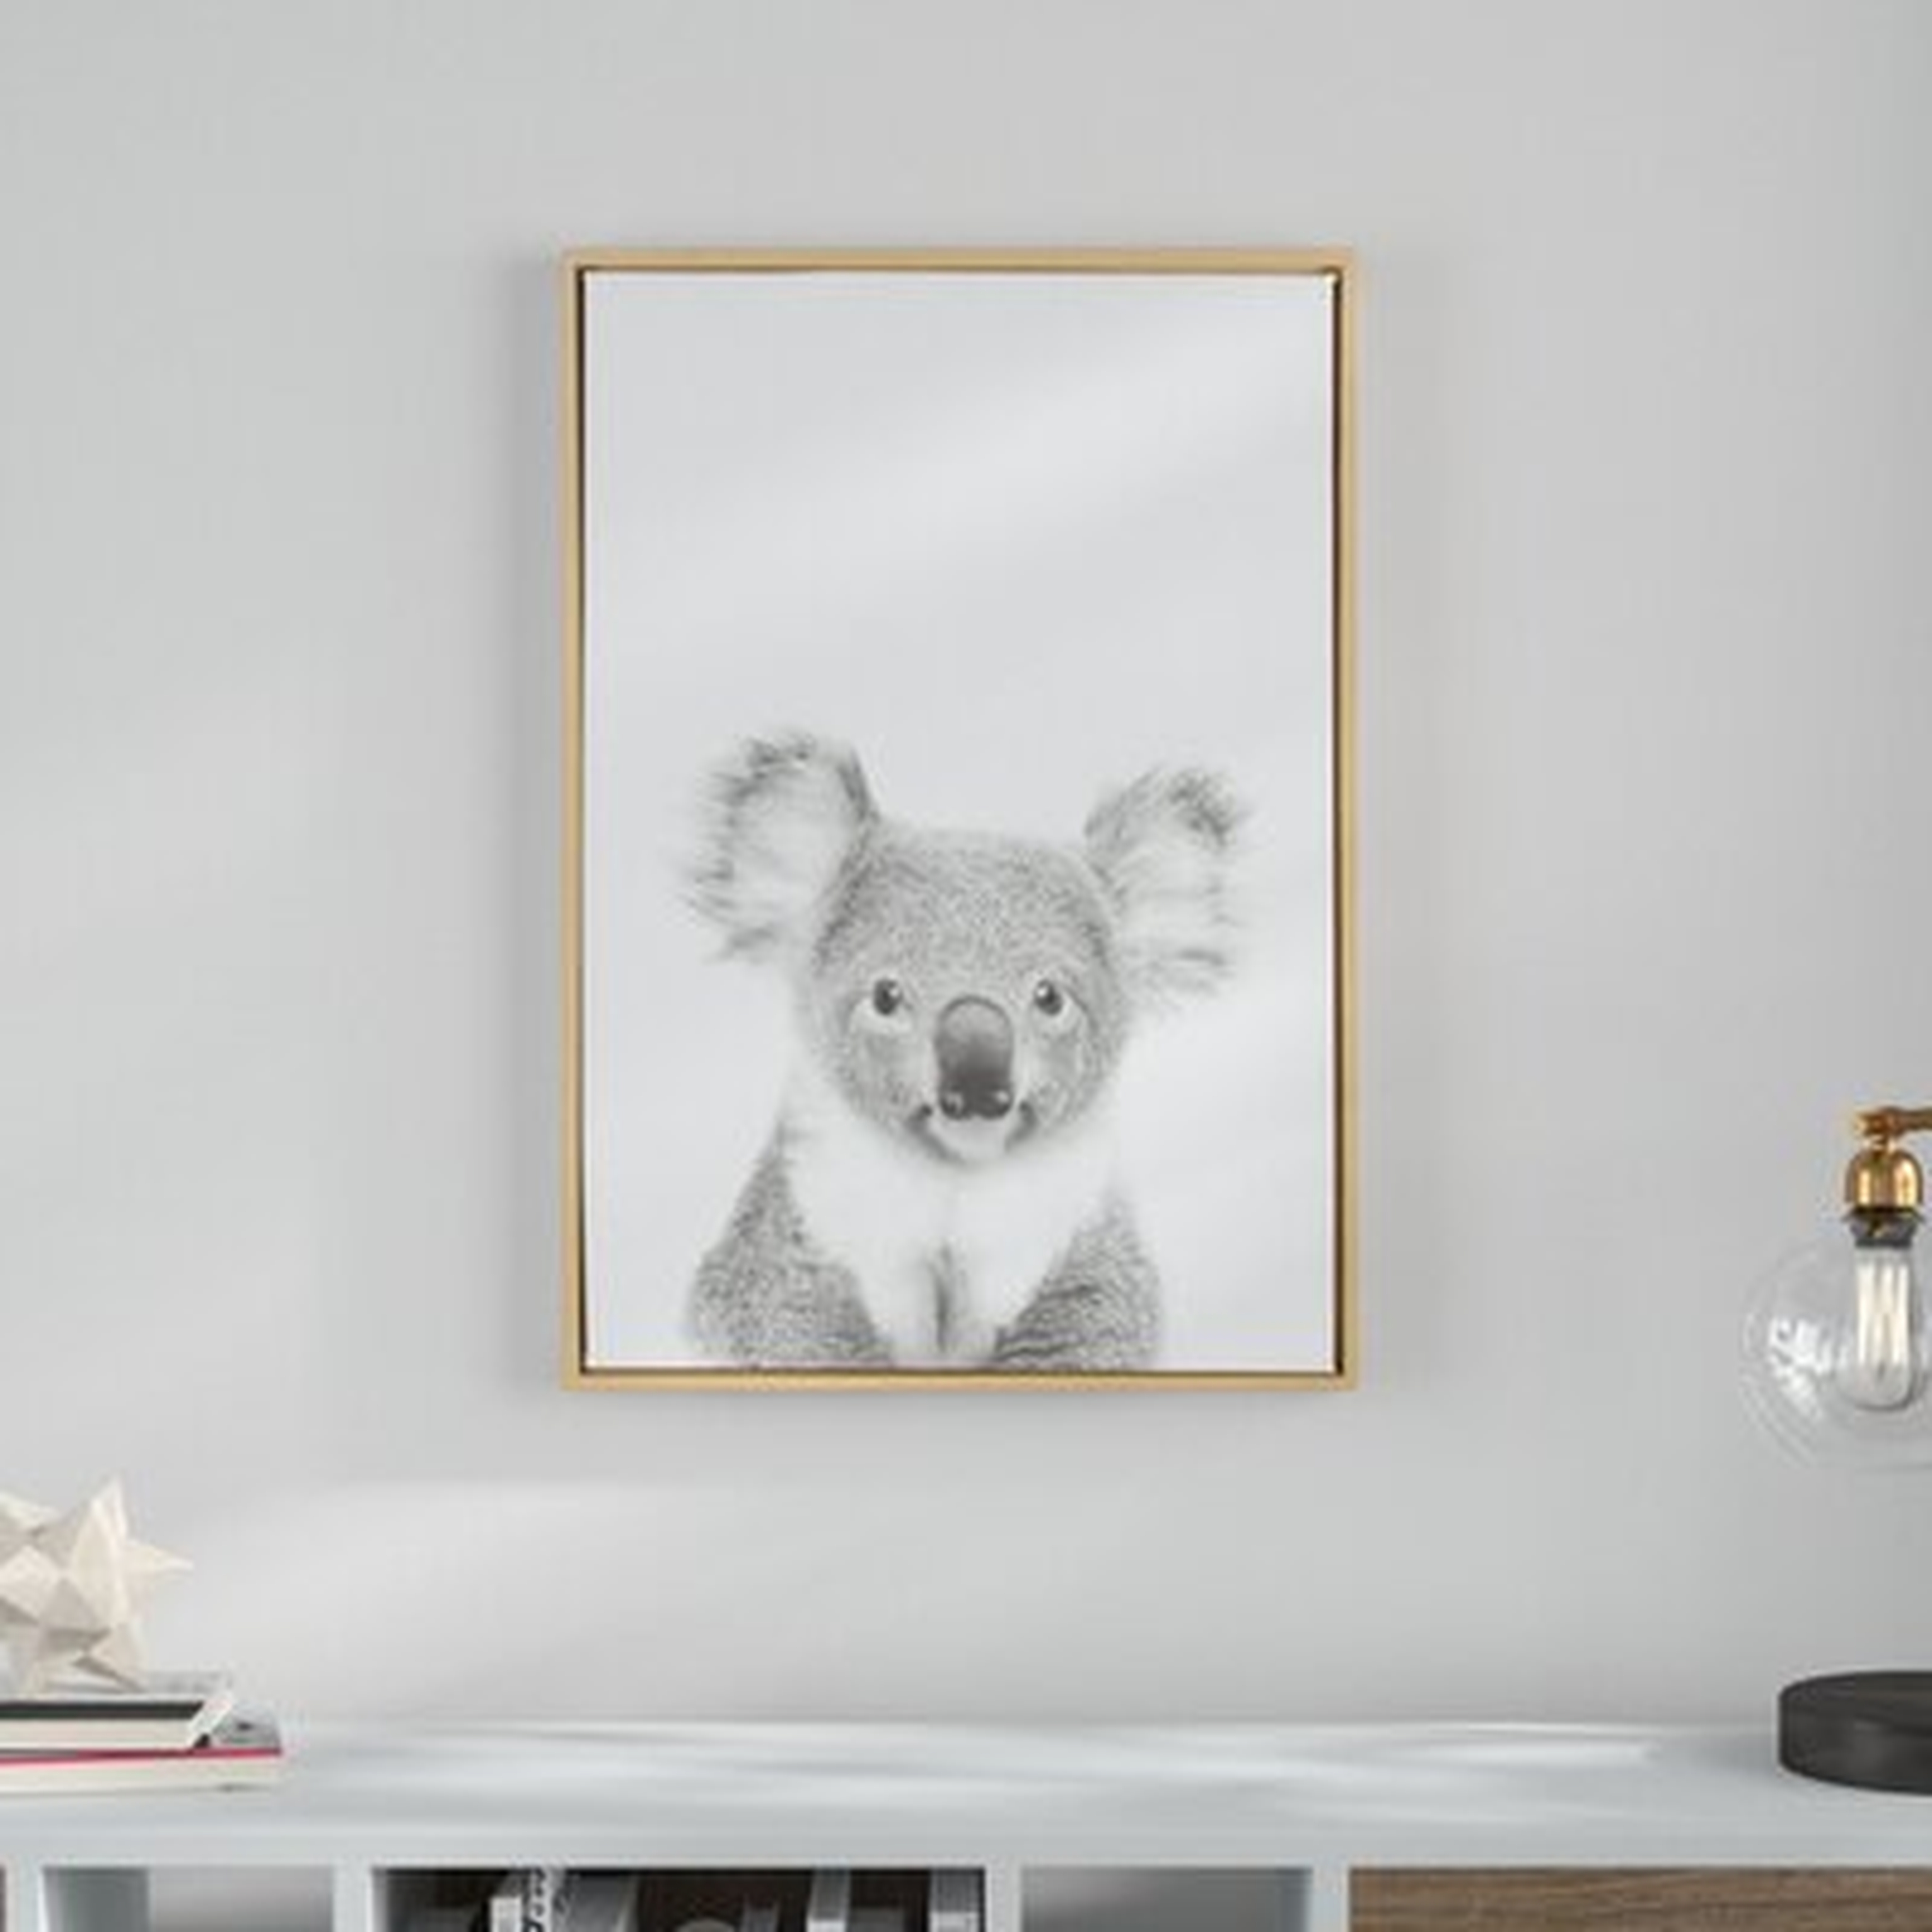 Maroni Koala II Black And White Animal by Simon Te Tai - Photograph on Canvas - Wayfair